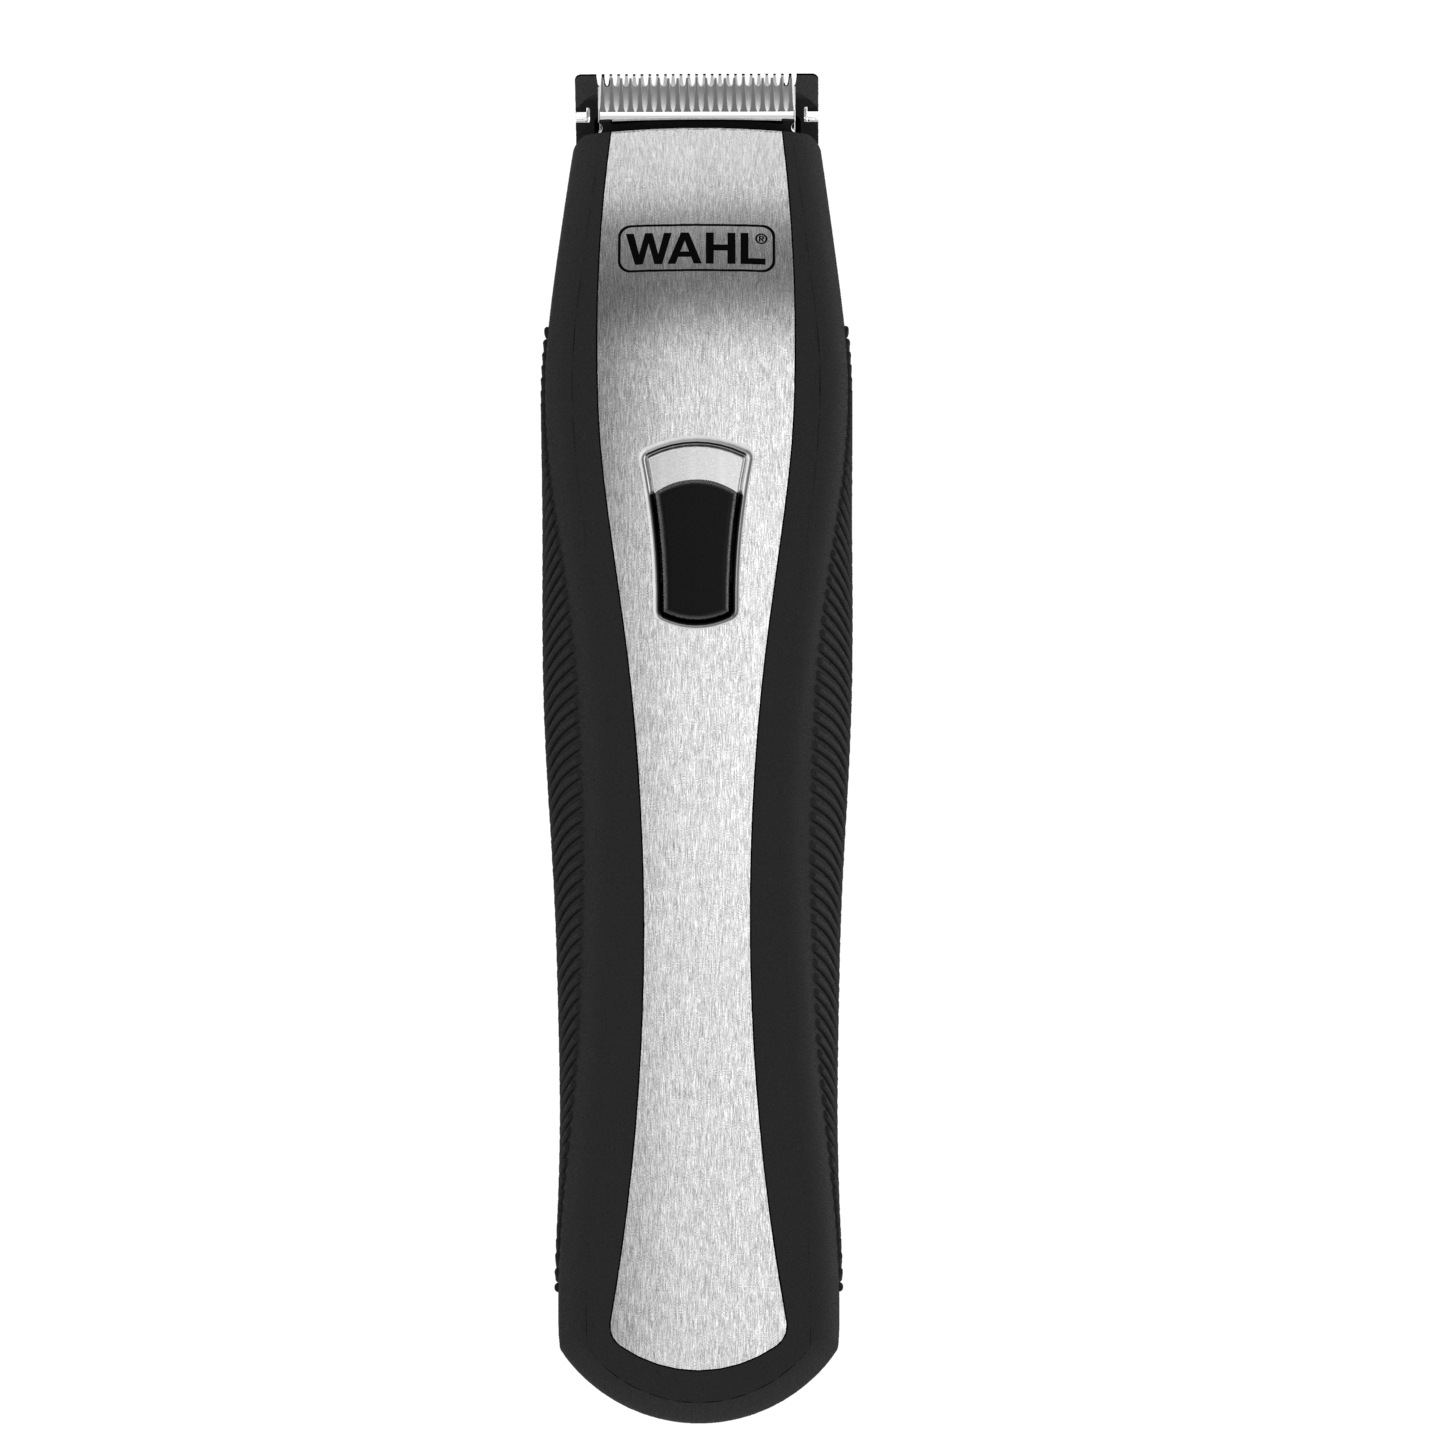 wahl wahl beard & stubble trimmer